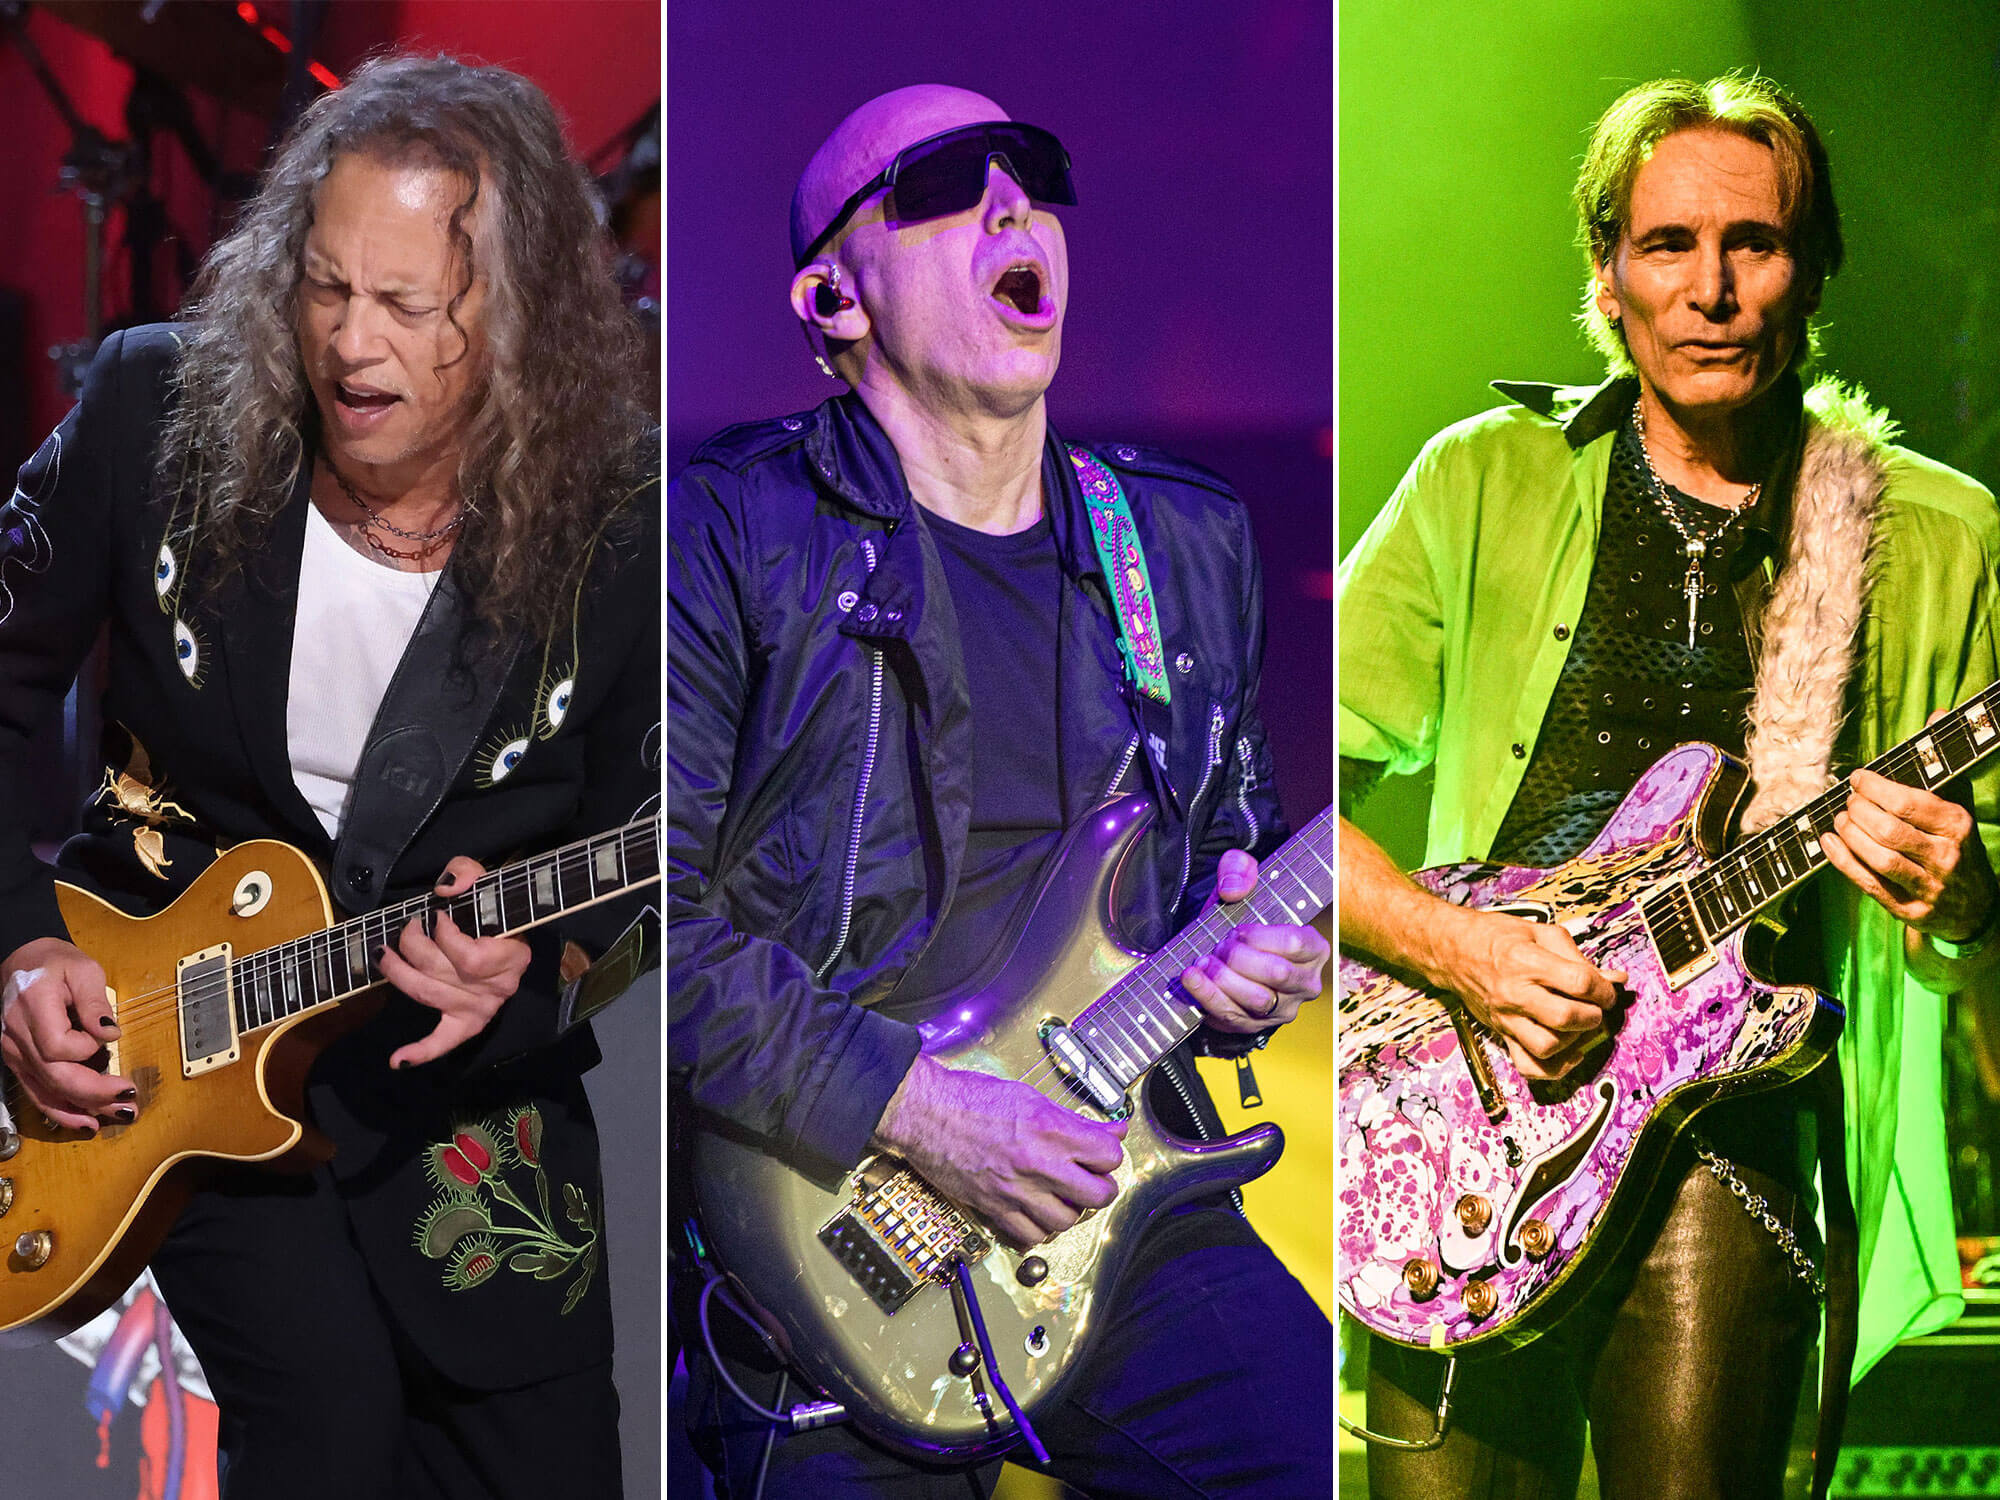 [L-R] Kirk Hammett, Joe Satriani and Steve Vai